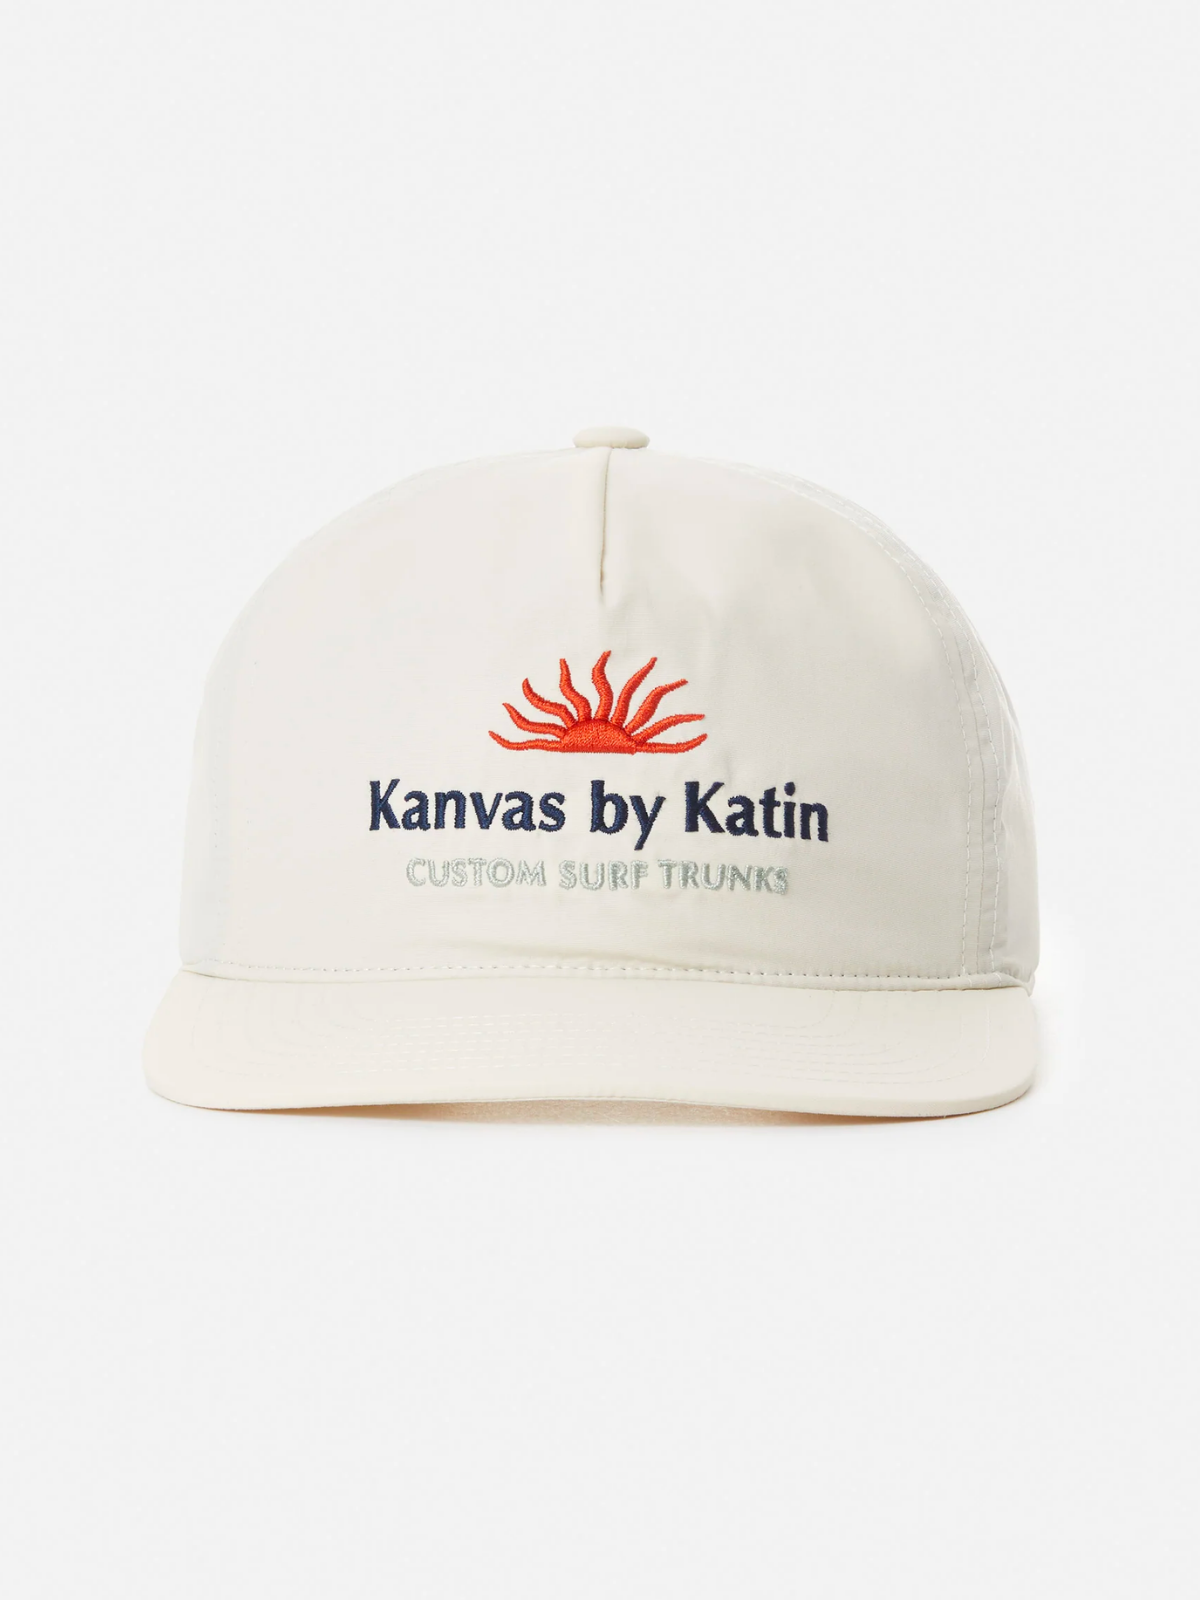 katin kanvas hat white black orange embroidery nylon snapback surf cap kempt athens ga georgia men's clothing store